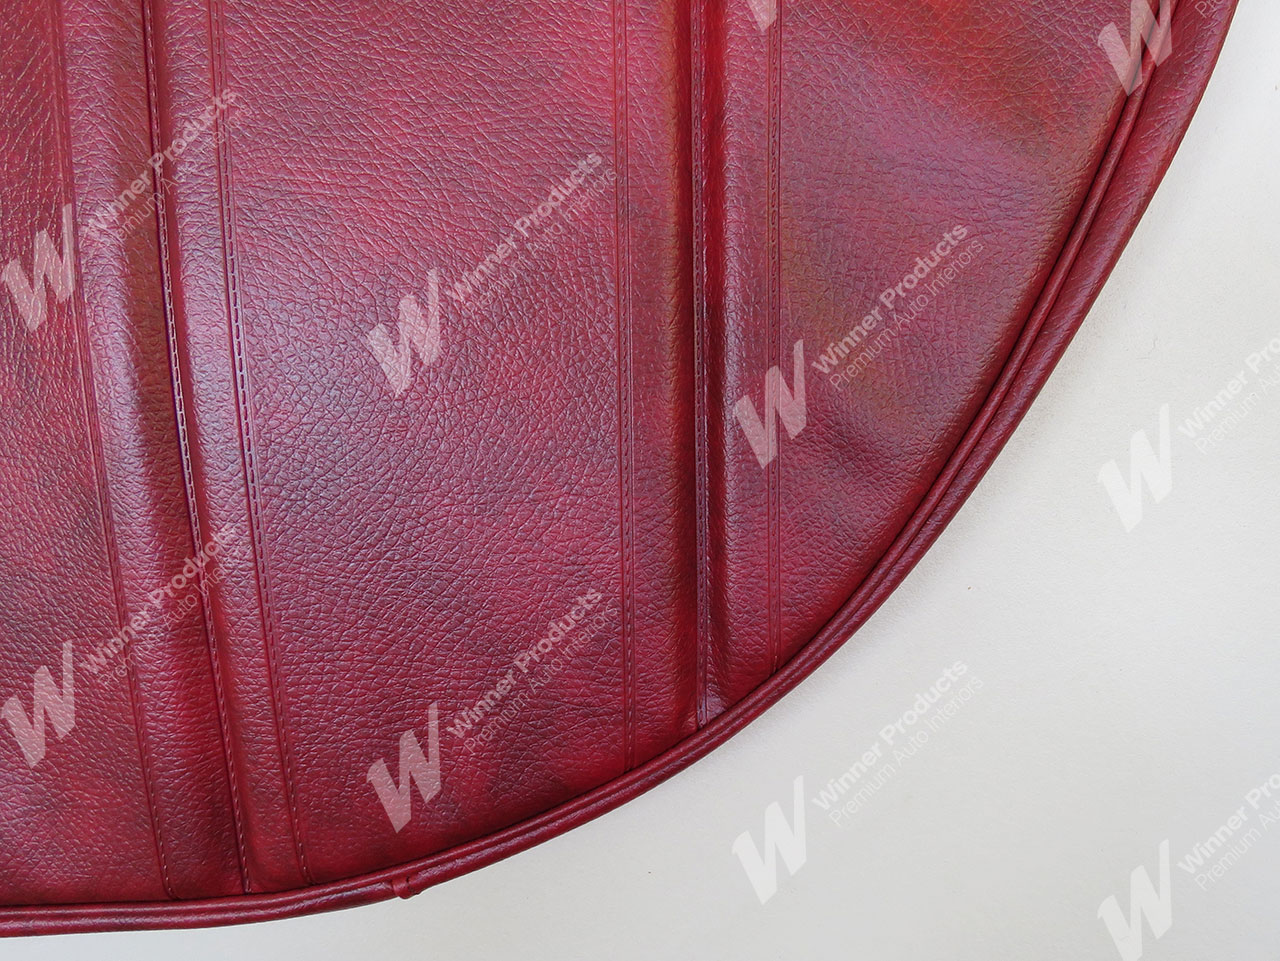 Holden Kingswood HG Kingswood Sedan 12E Baroque Red Seat Covers (Image 4 of 4)